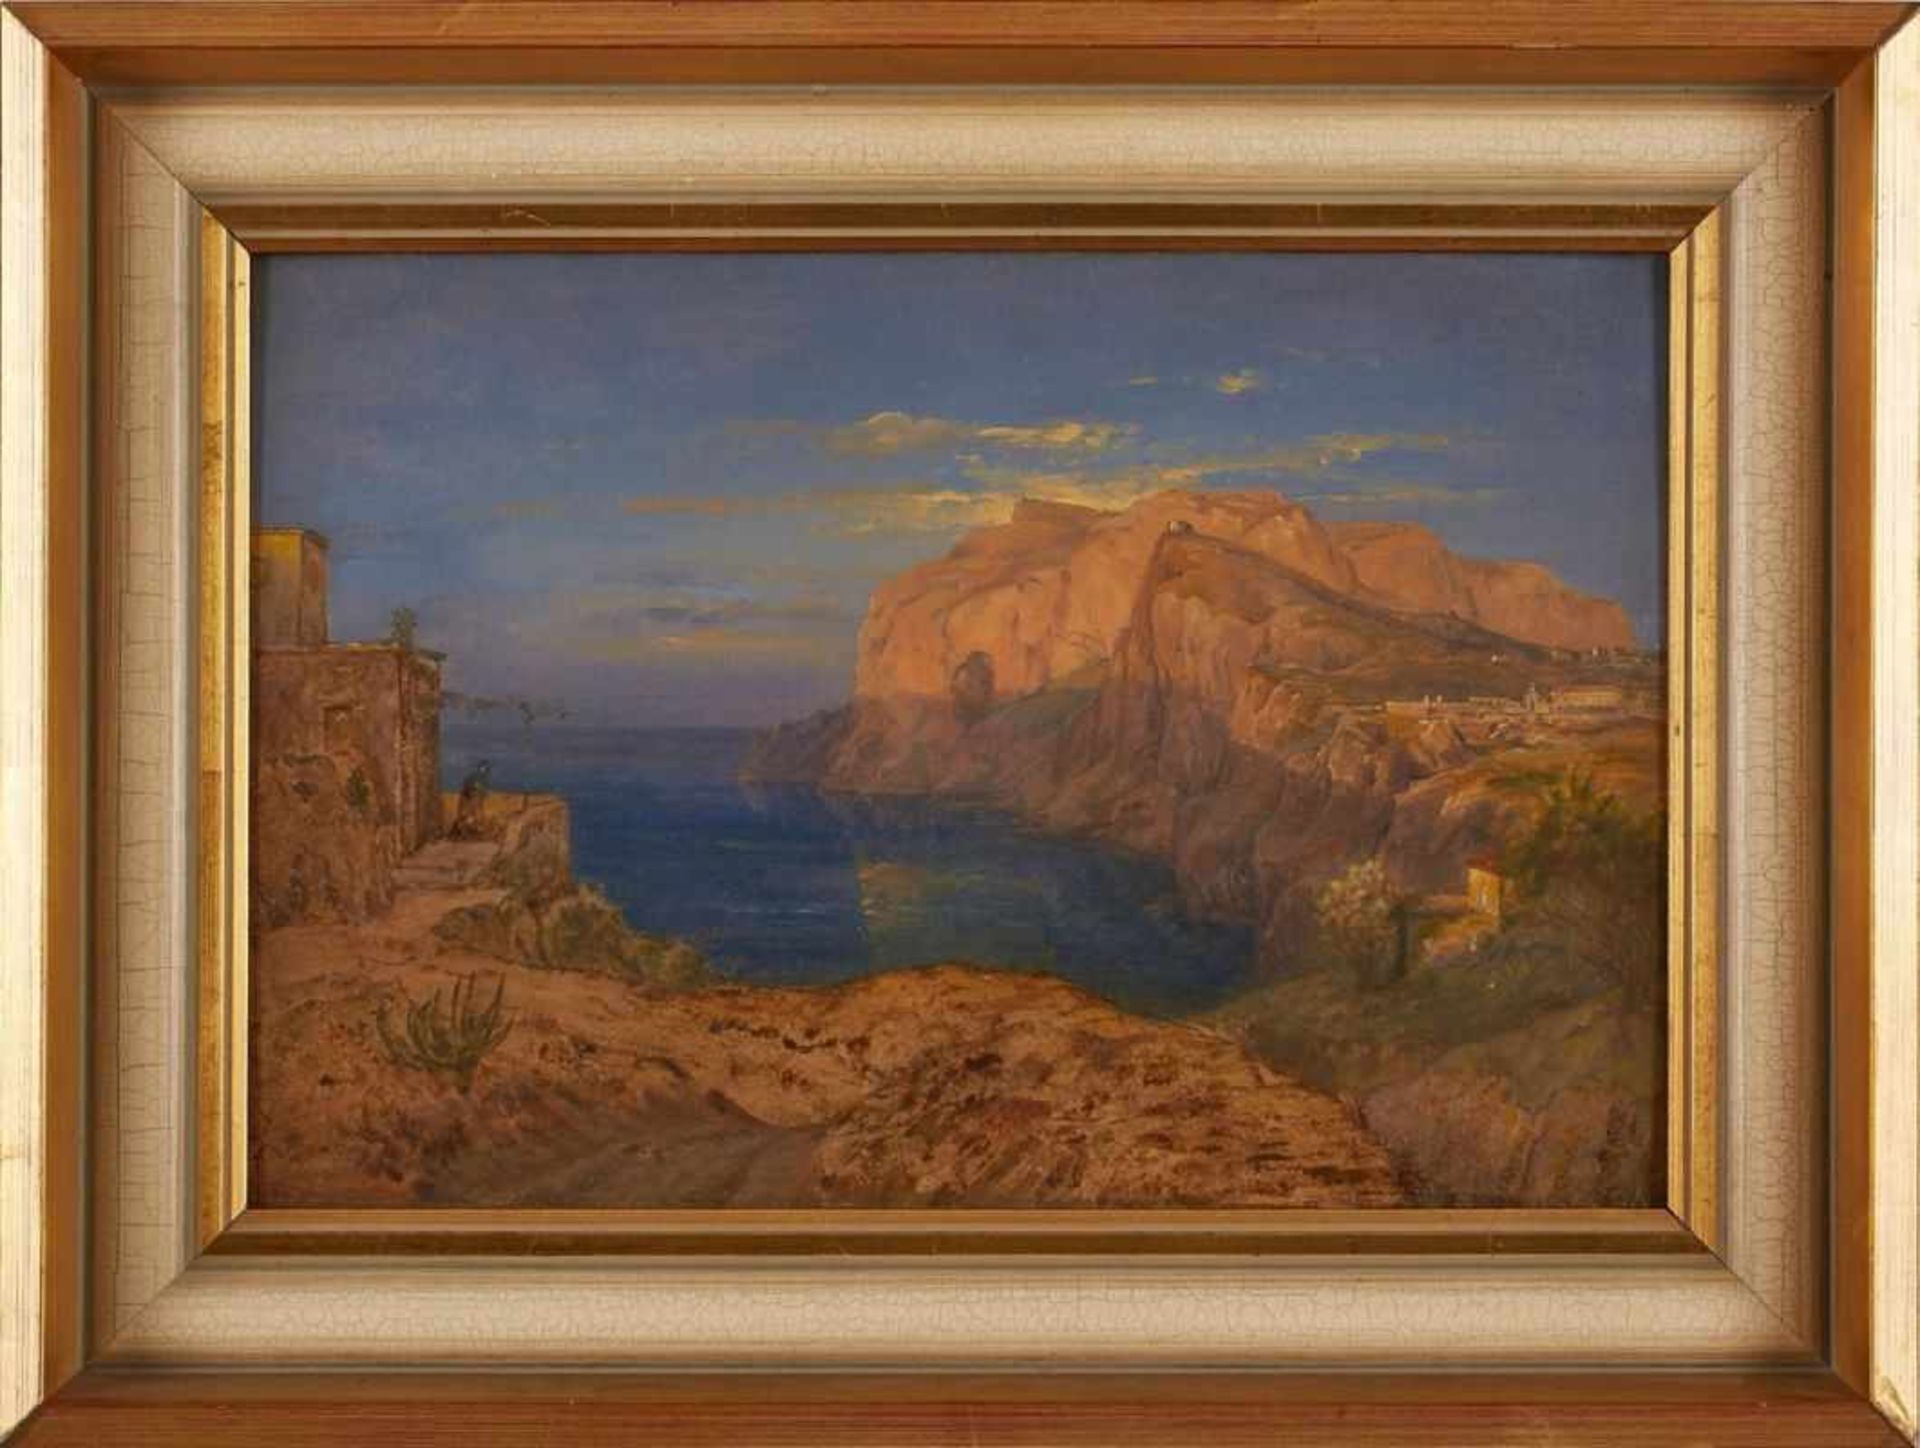 Gemälde/Ölstudie Carl Morgenstern 1811 Frankfurt - 1893 Frankfurt "Capri" Verso von alter Hand